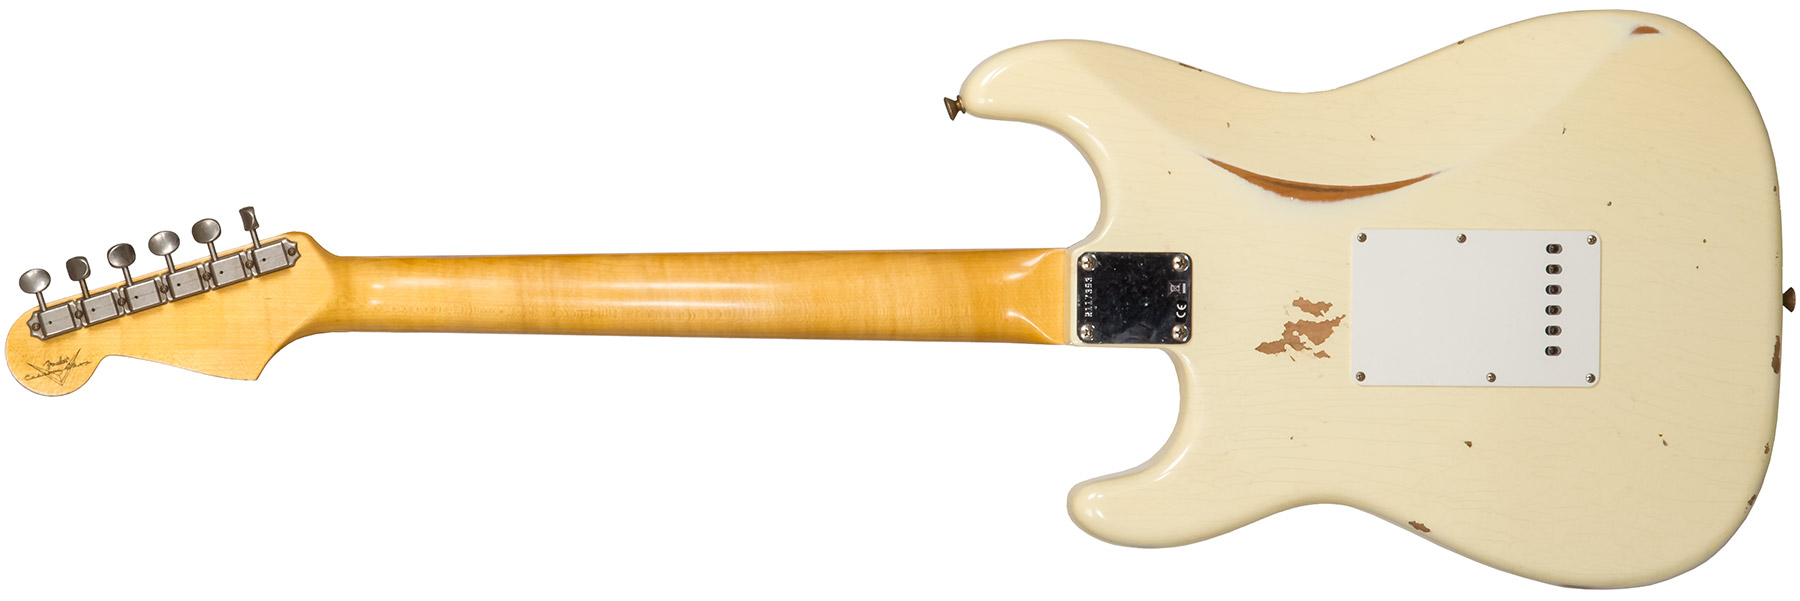 Fender Custom Shop Strat 1959 3s Trem Rw #r117393 - Relic Aged Vintage White - E-Gitarre in Str-Form - Variation 1